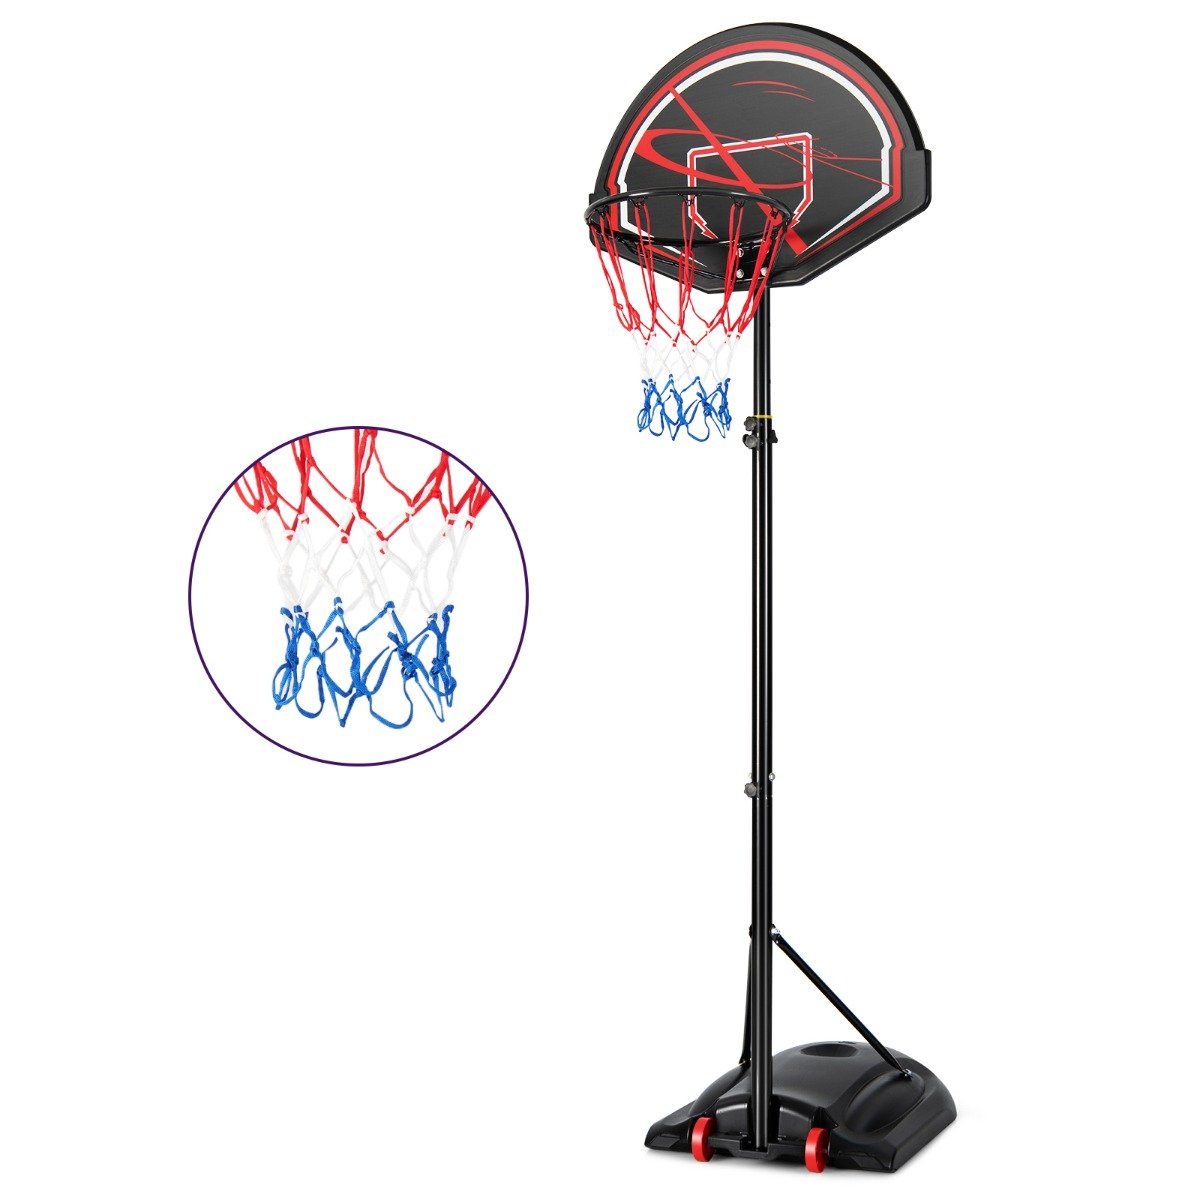 Dunk Like a Pro - Shop Portable Basketball Hoops Today!